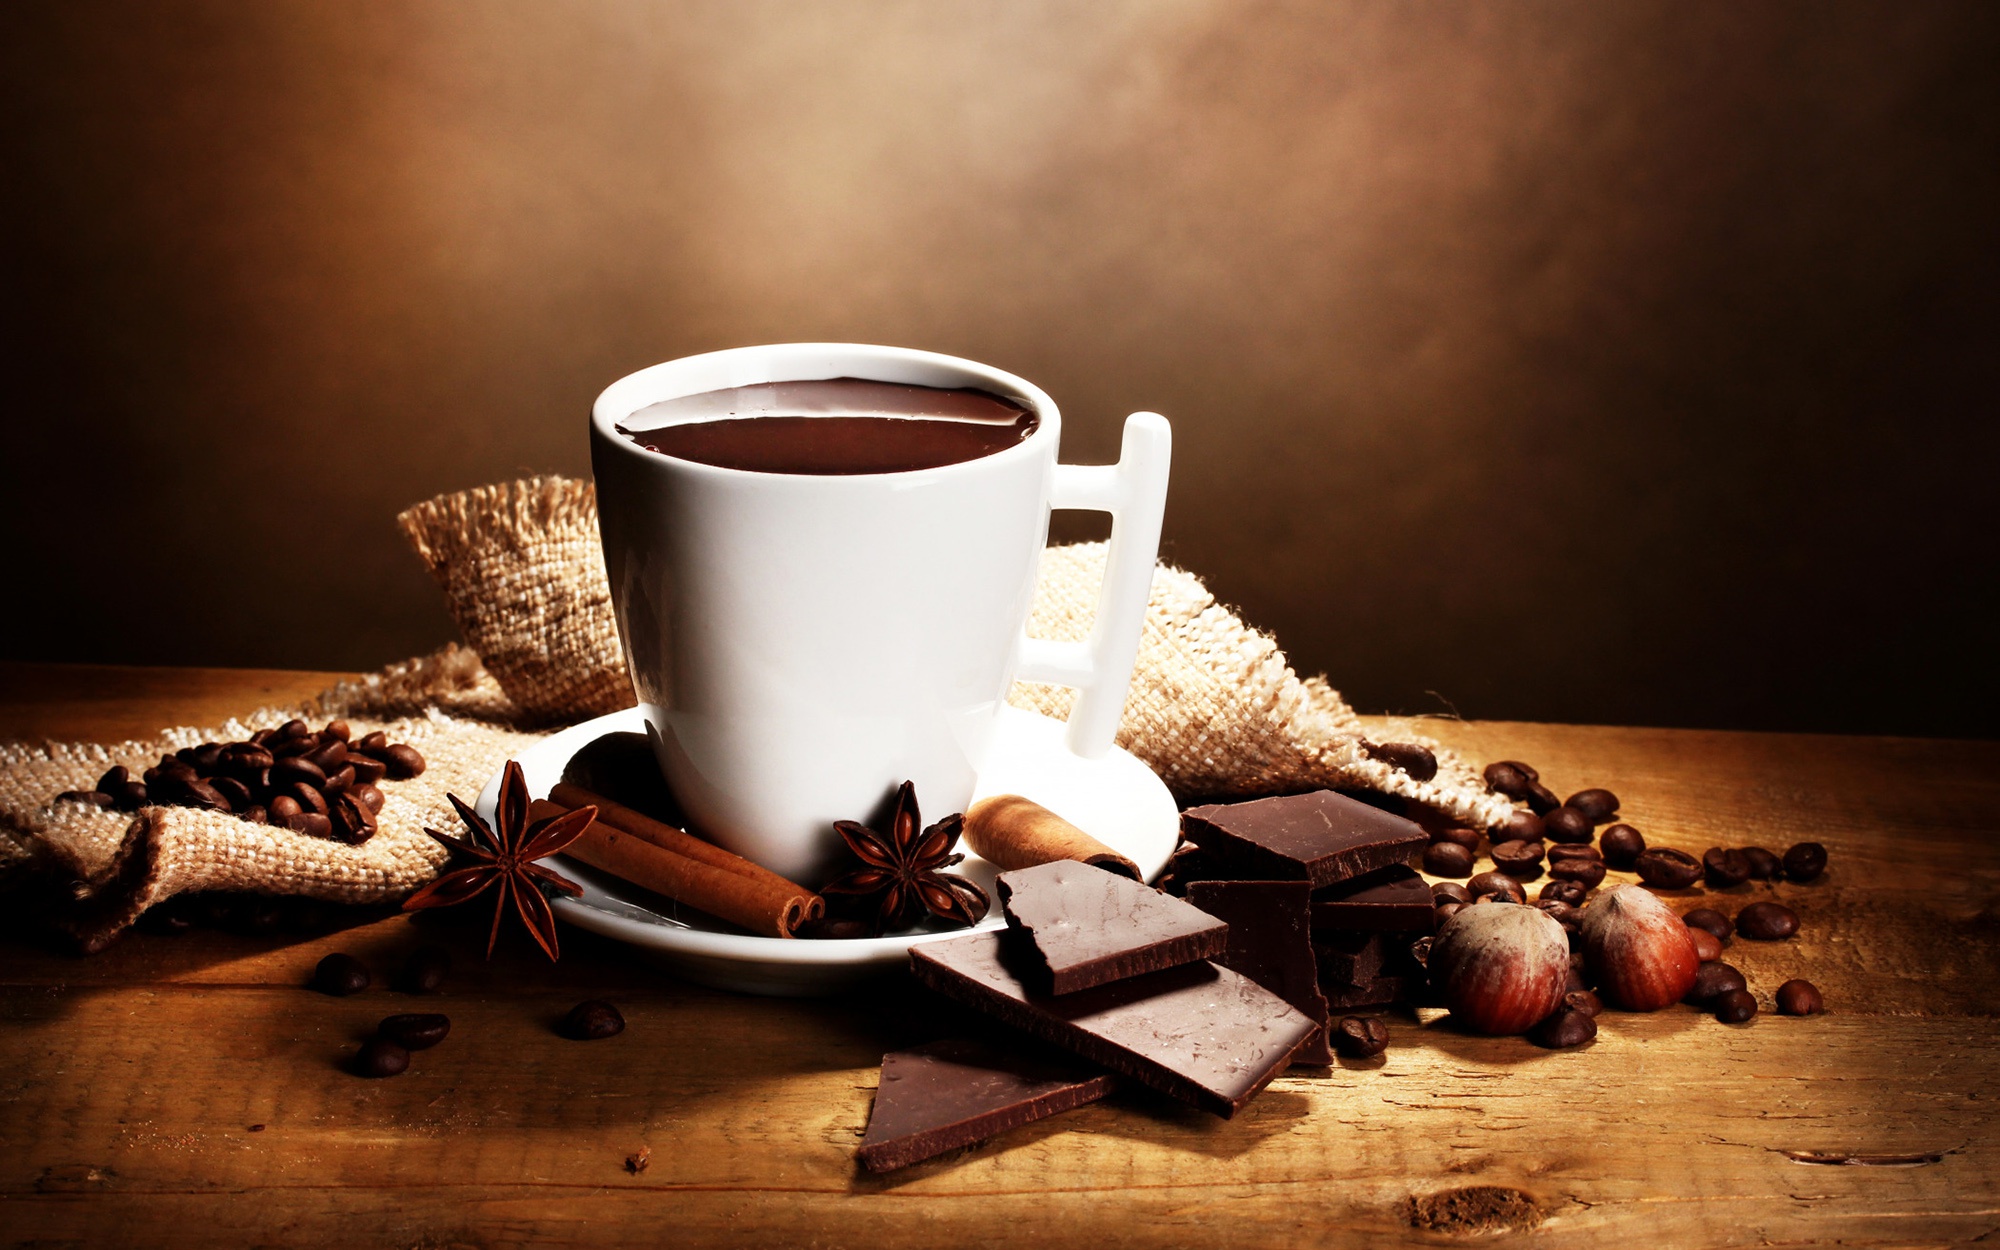 Chocolate Cinnamon Coffee Cup Star Anise Still Life 2000x1250